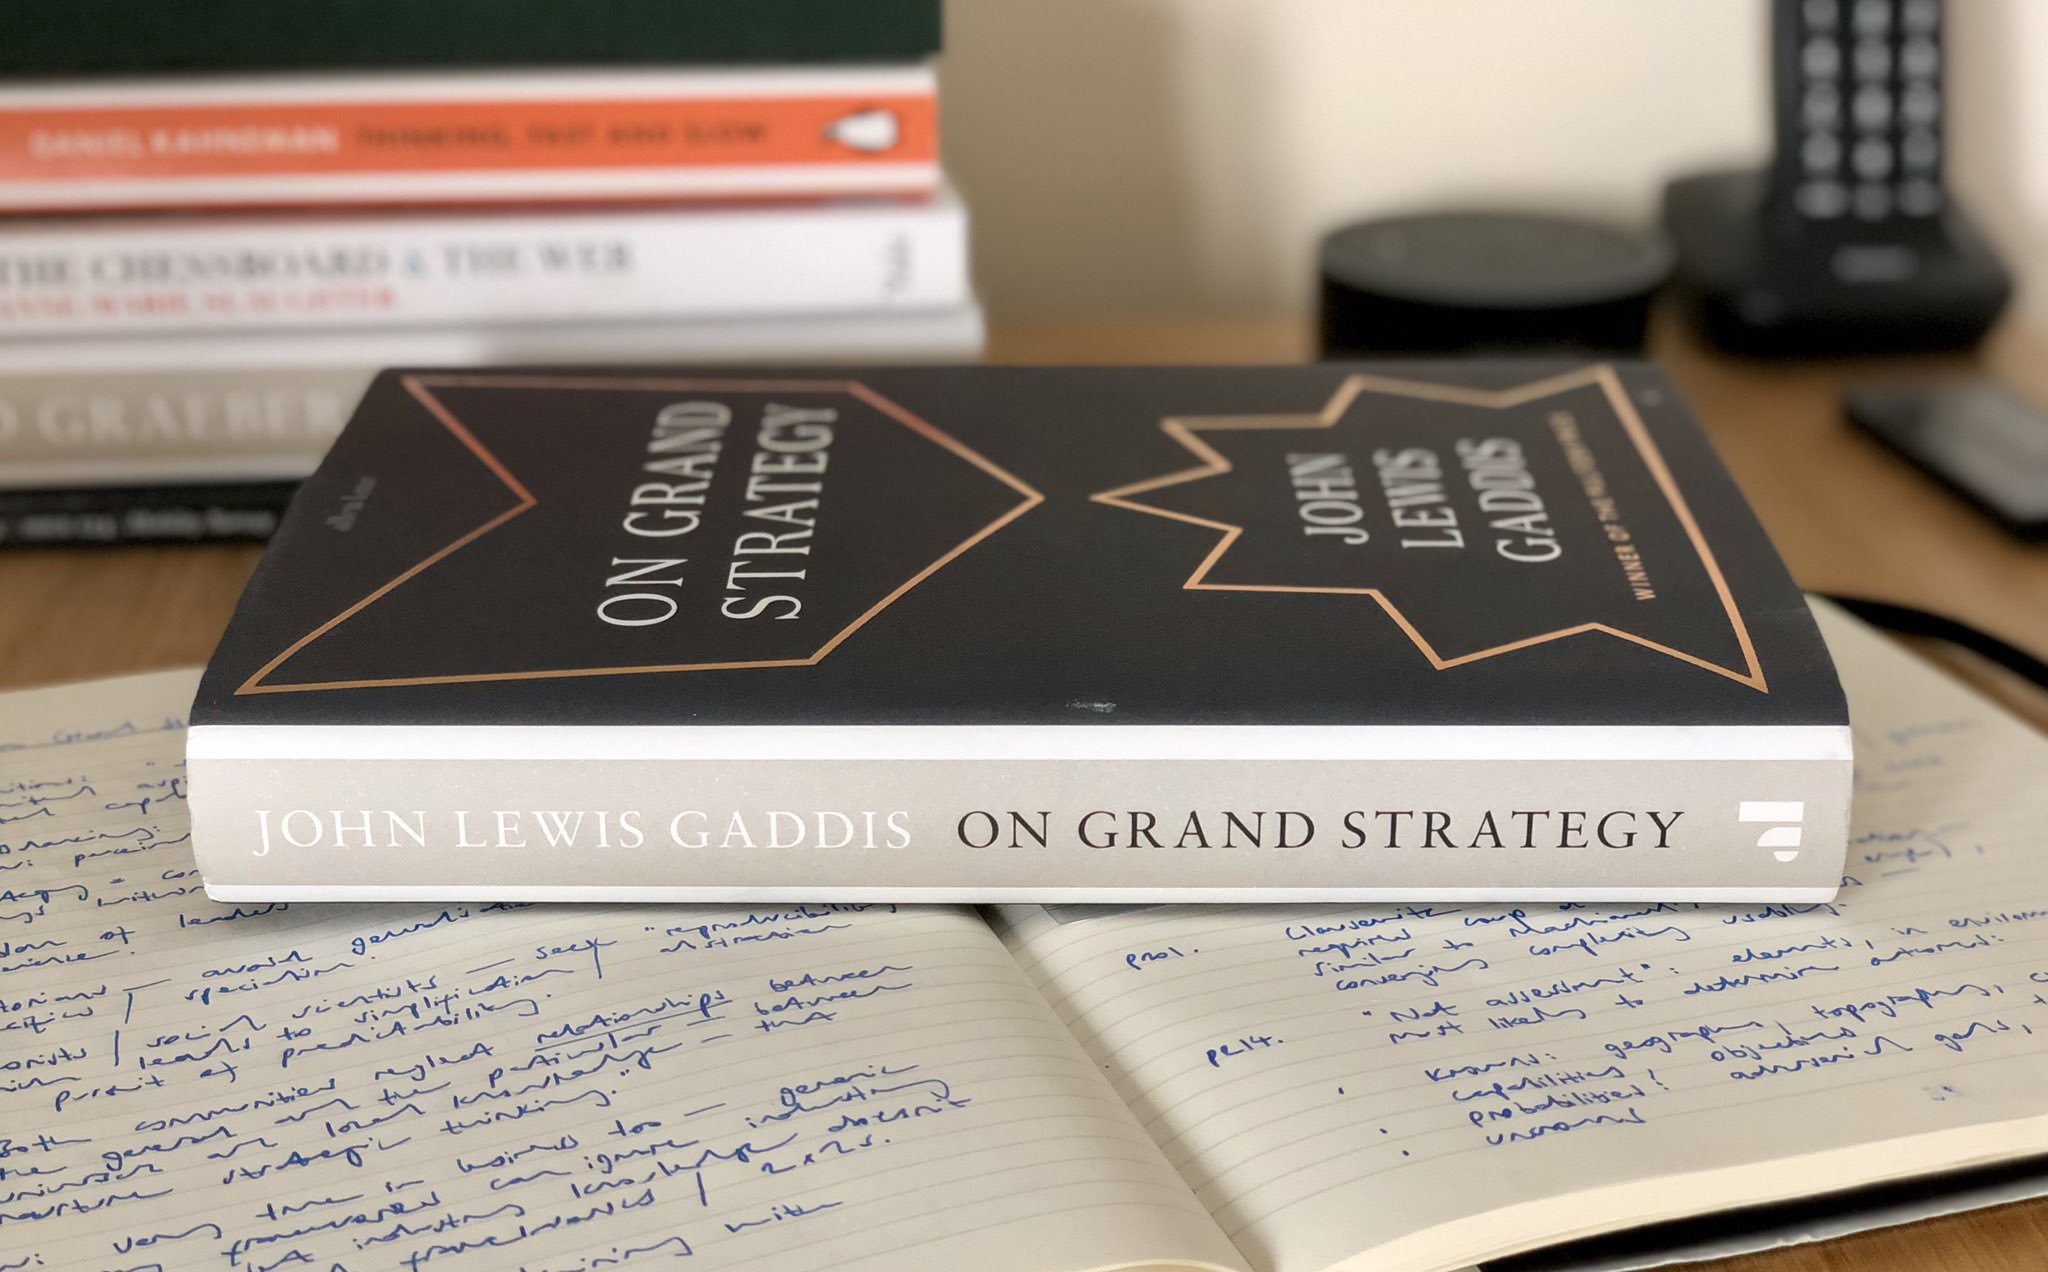 John Lewis Gaddis: On Grand Strategy